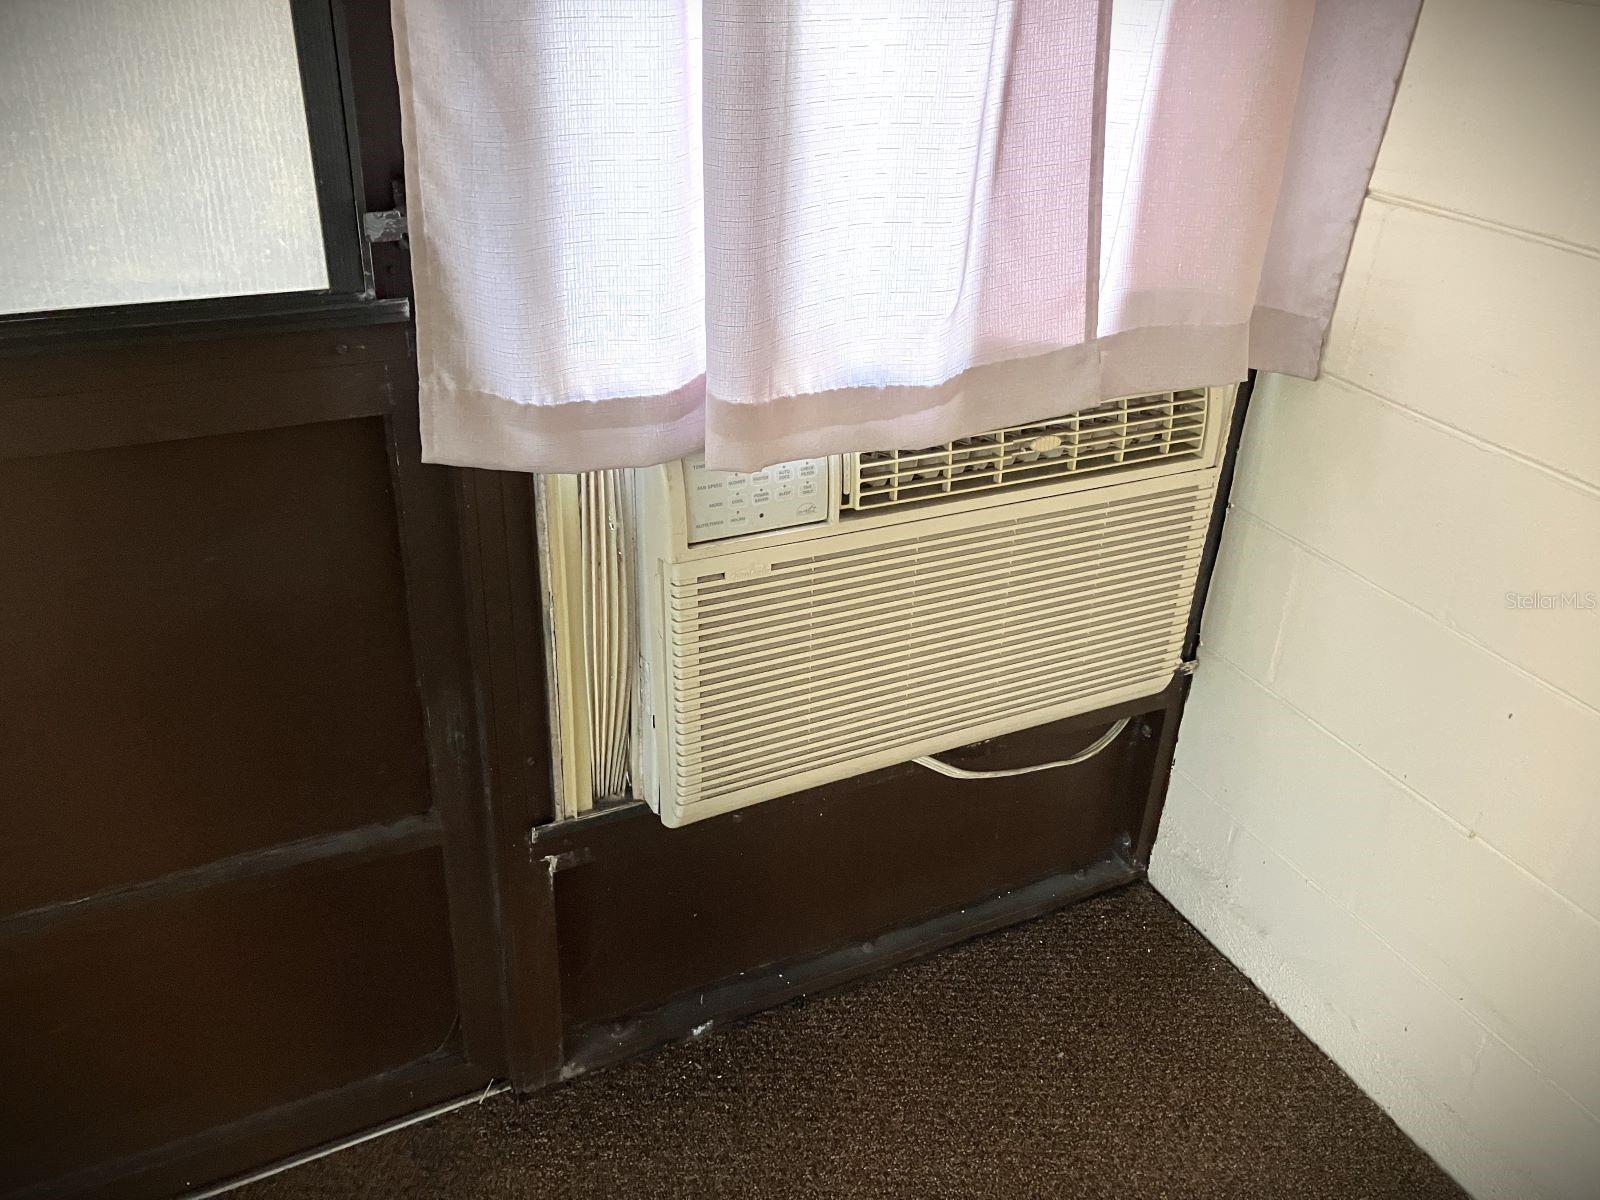 Unit AC for enclosed porch